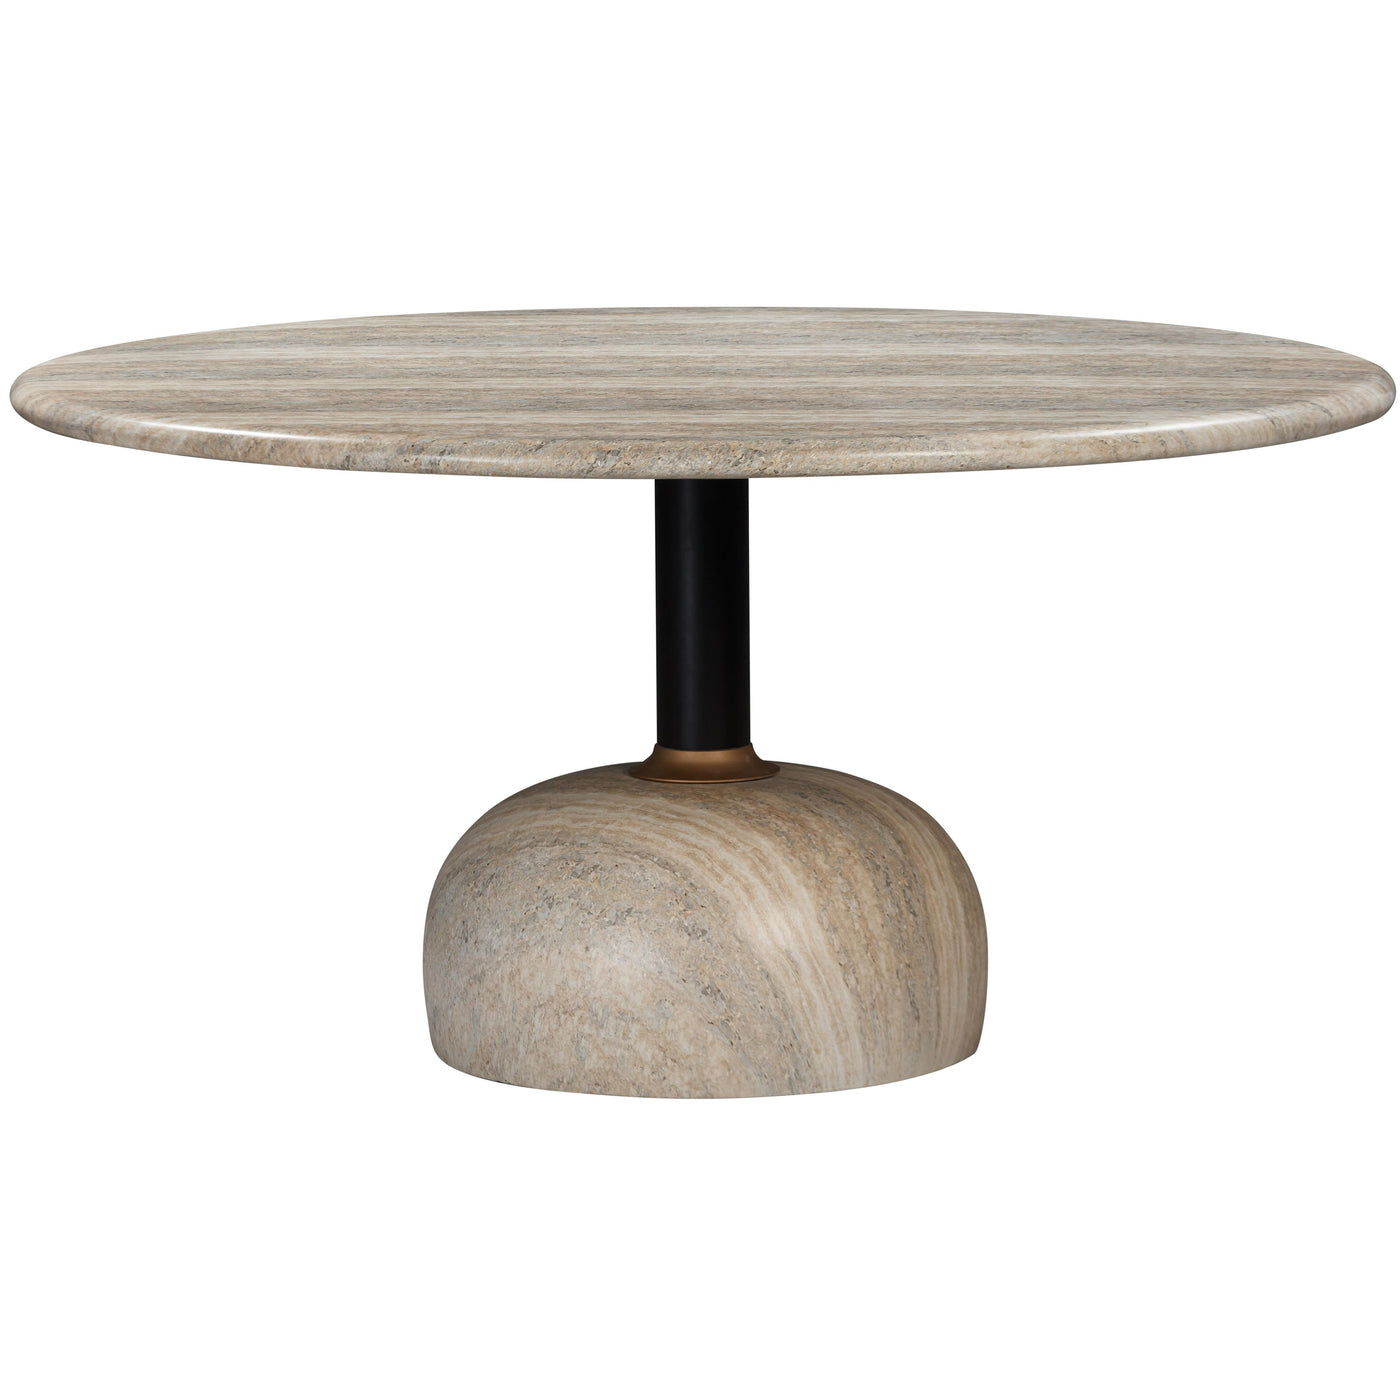 Luxxa Round Dining Table Travertine - 1.5m